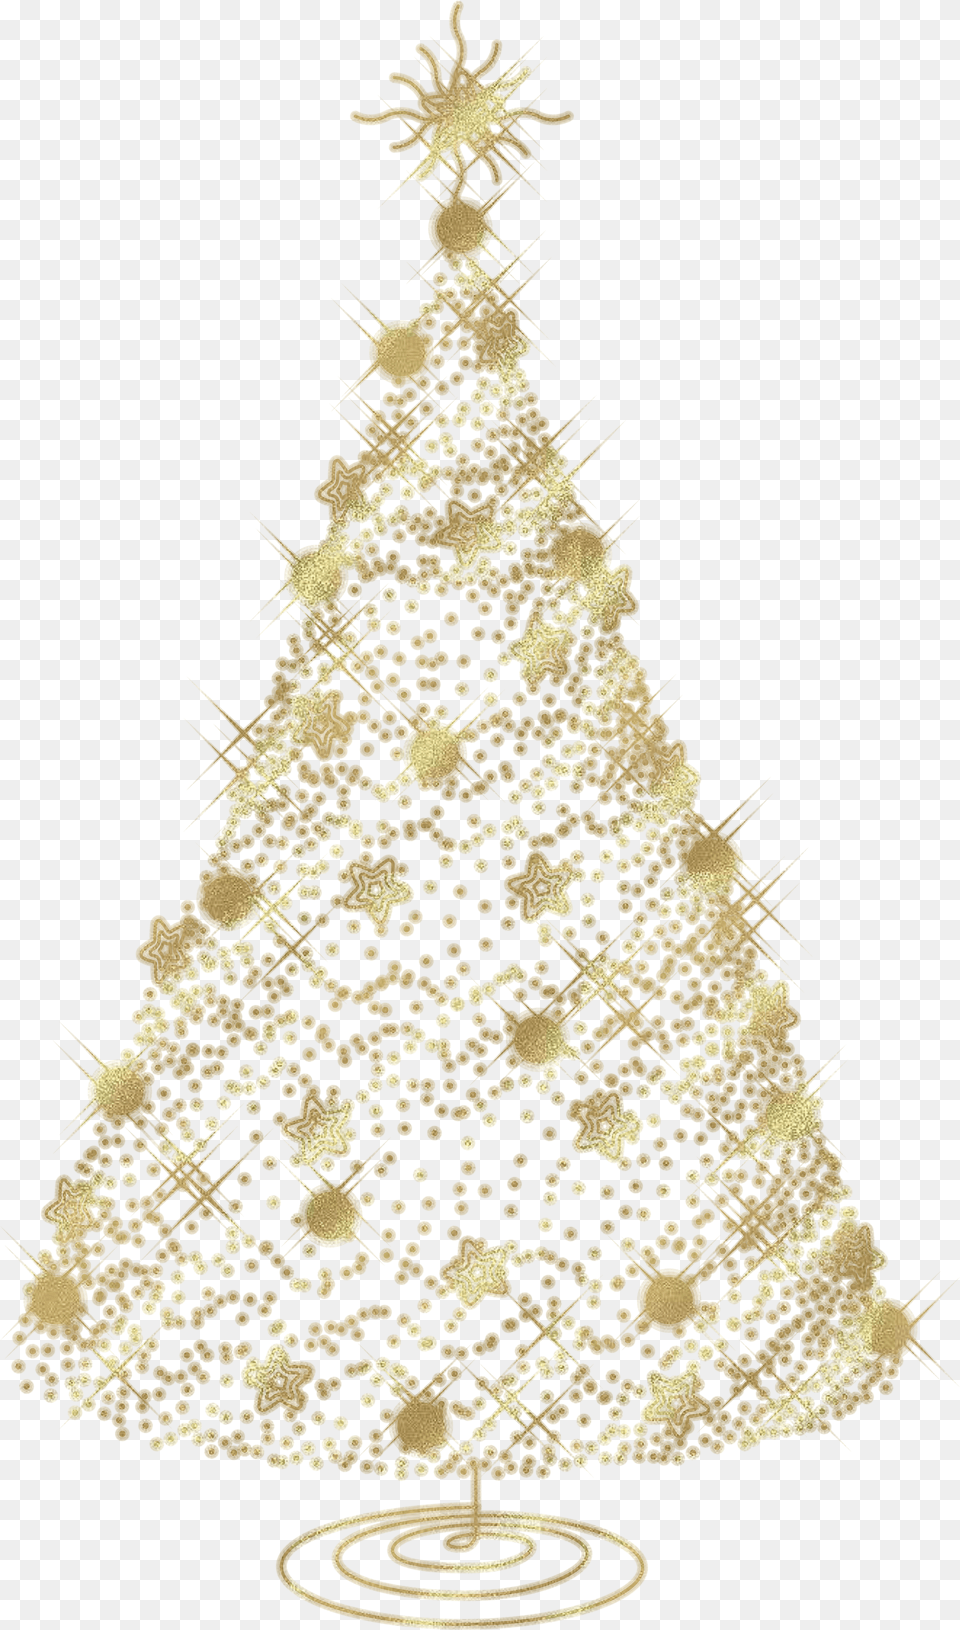 Christmas Tree Clip Art Transparent Clipart Christmas Transparent Background Png Image